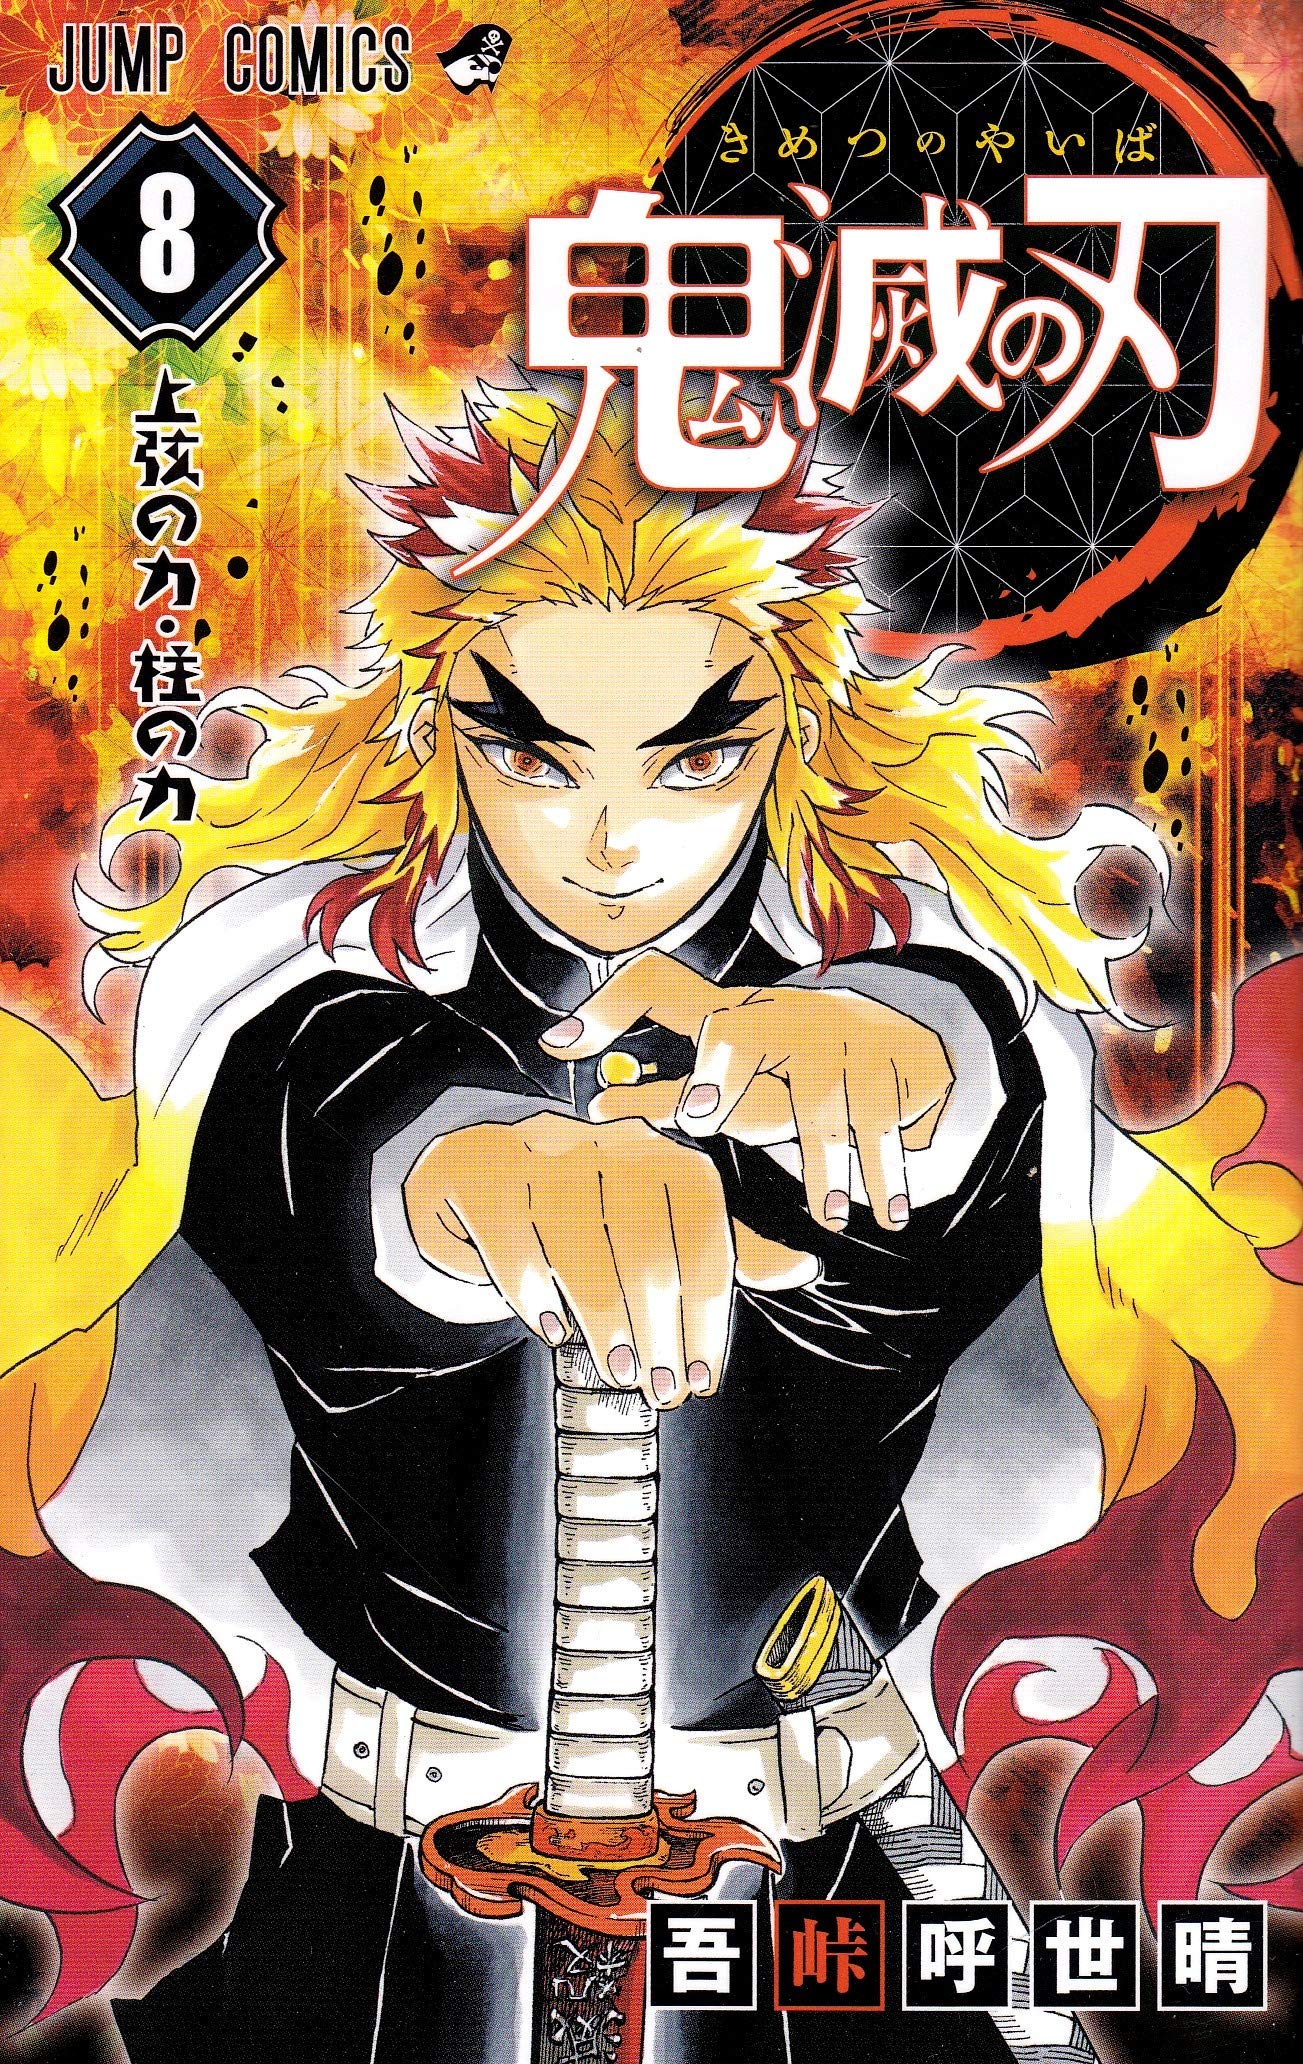 Demon Slayer: Kimetsu no Yaiba Japanese manga volume 8 front cover